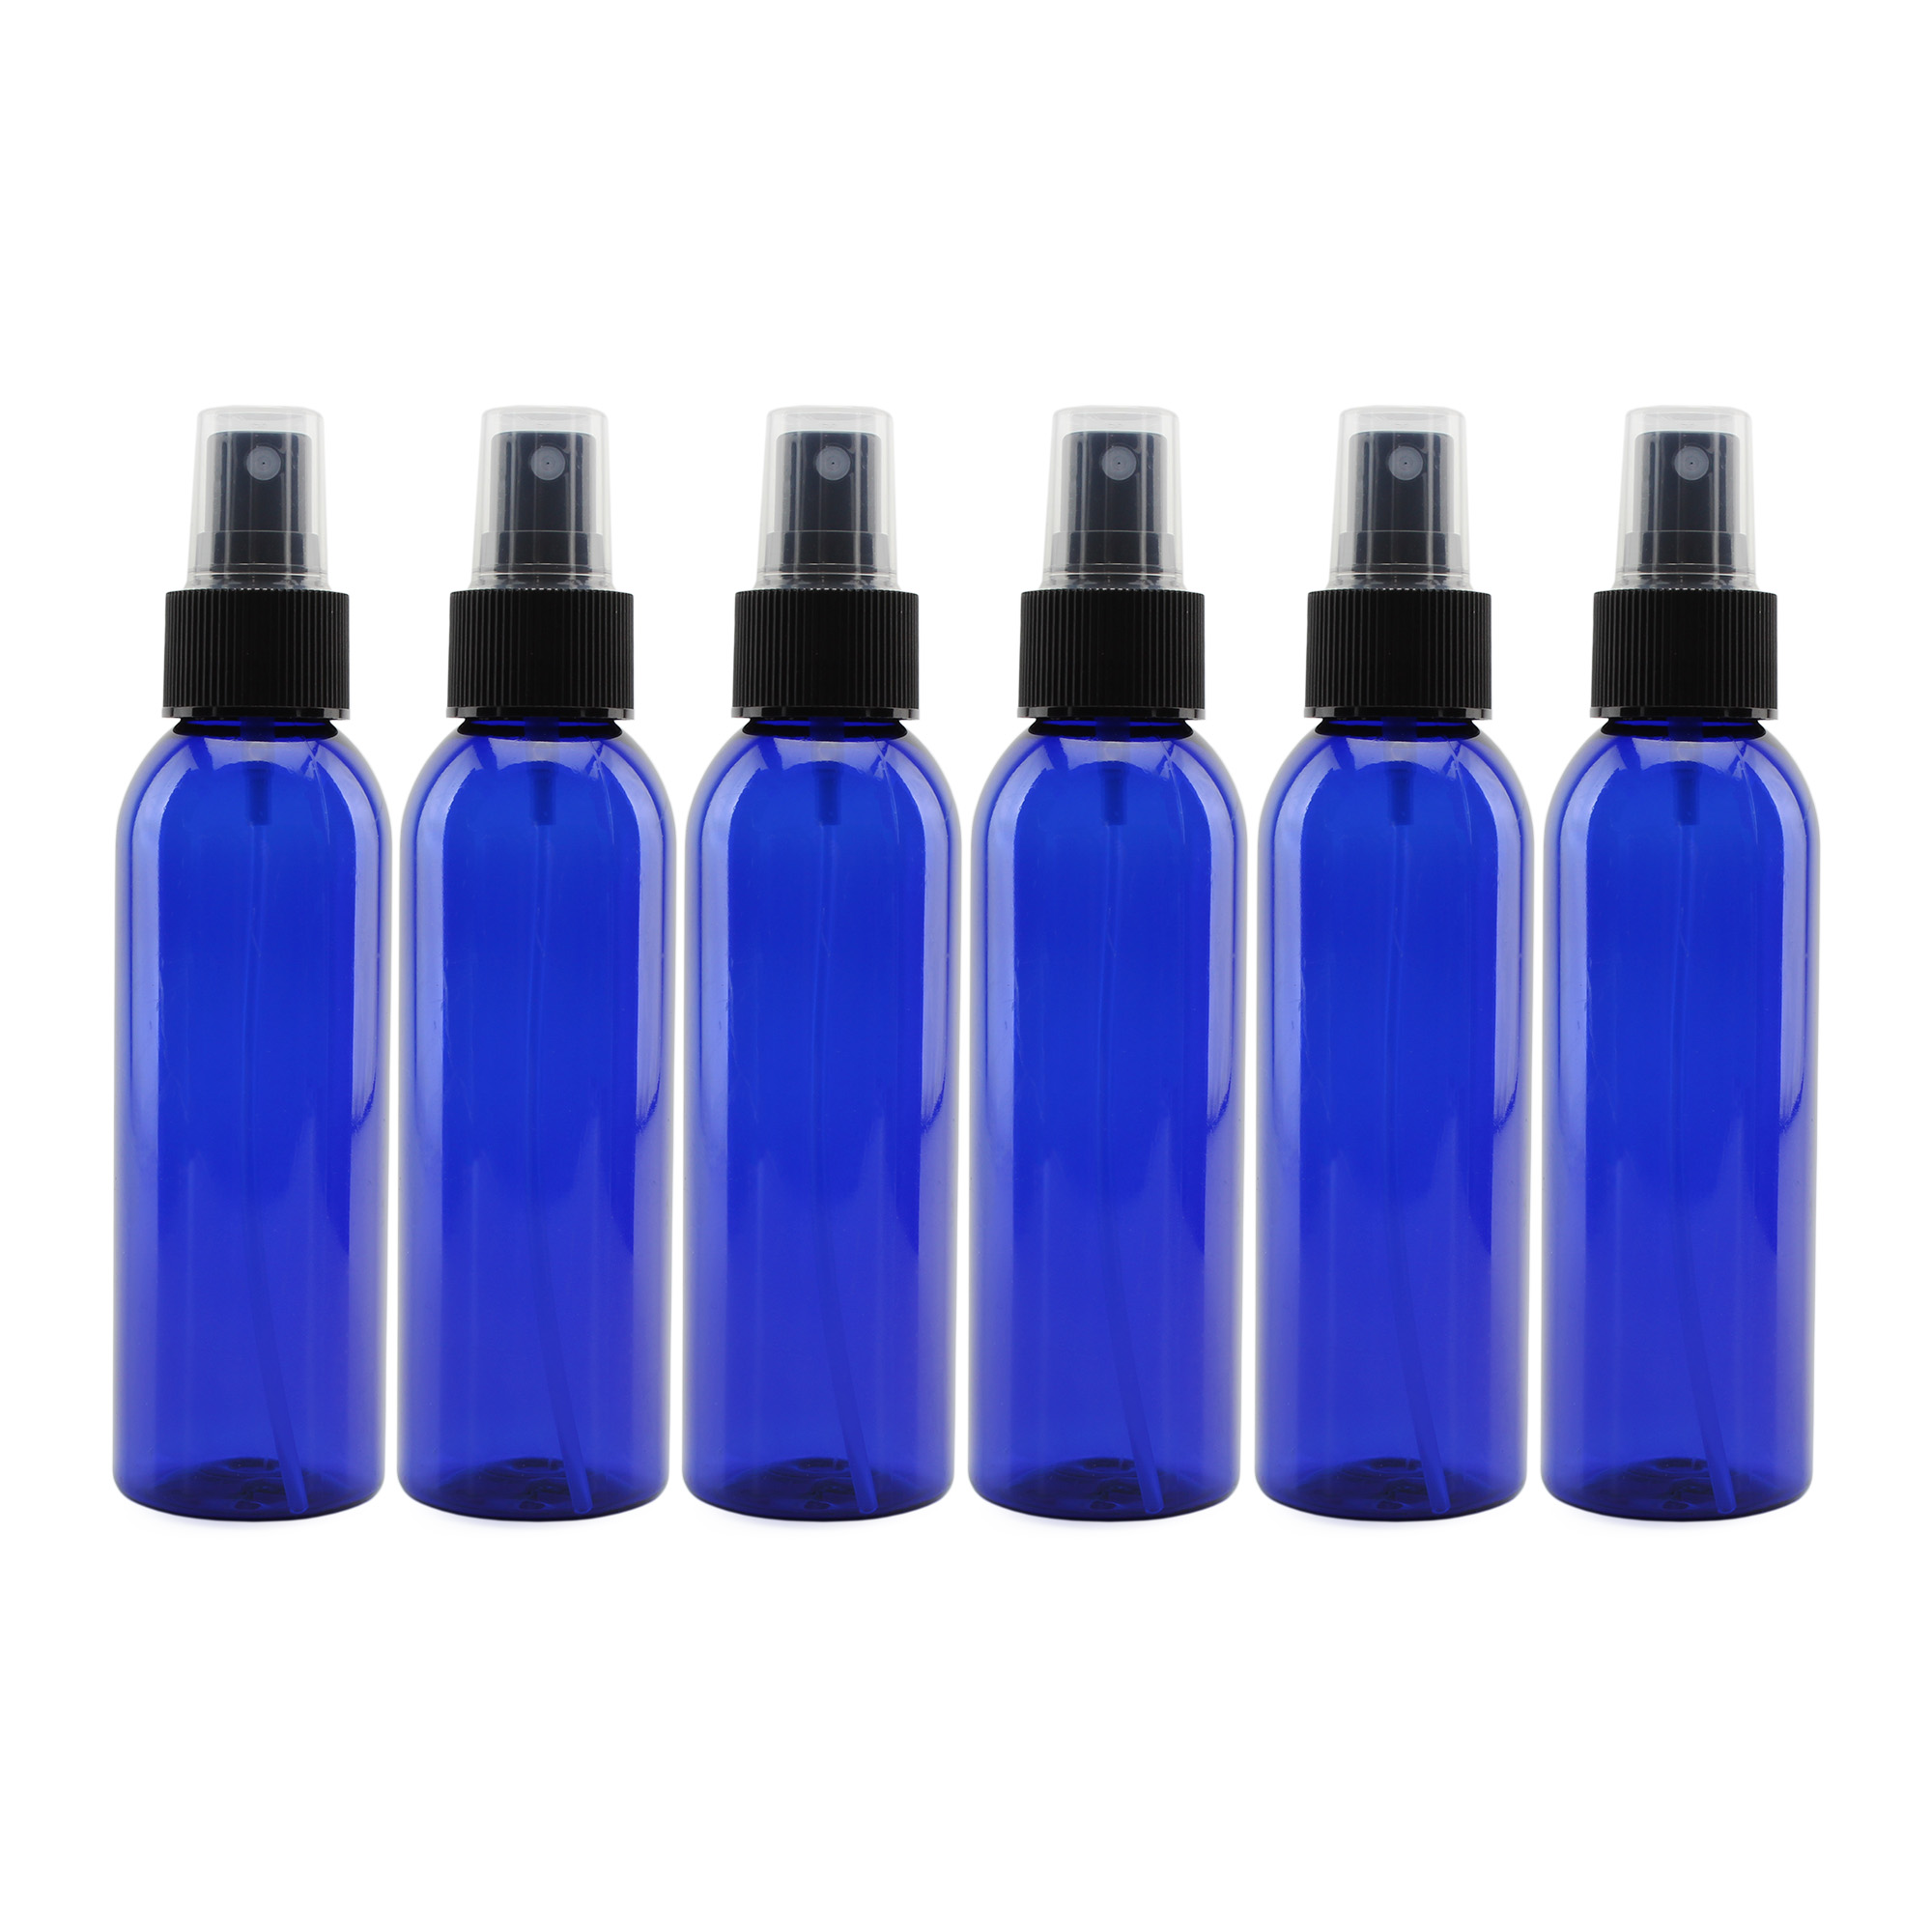 4oz Blue Large discharge sale trend rank Empty Plastic Refillable Spray Bottles Atom Mist Fine w